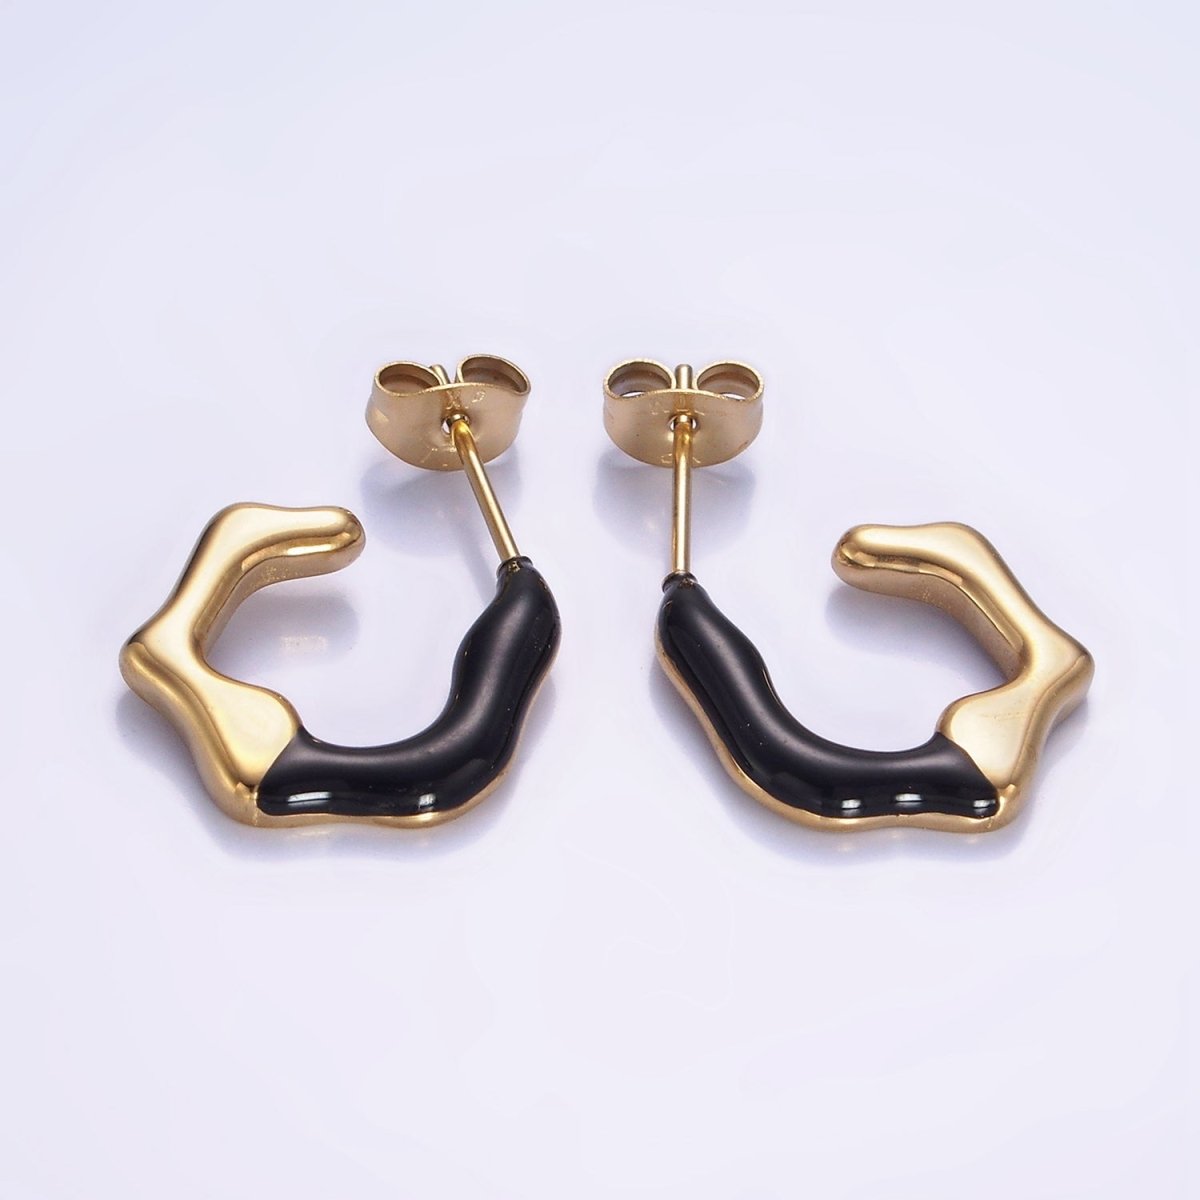 Stainless Steel White, Black Enamel Abstract C-Shaped Hoop Earrings | AB1147 AB1148 - DLUXCA